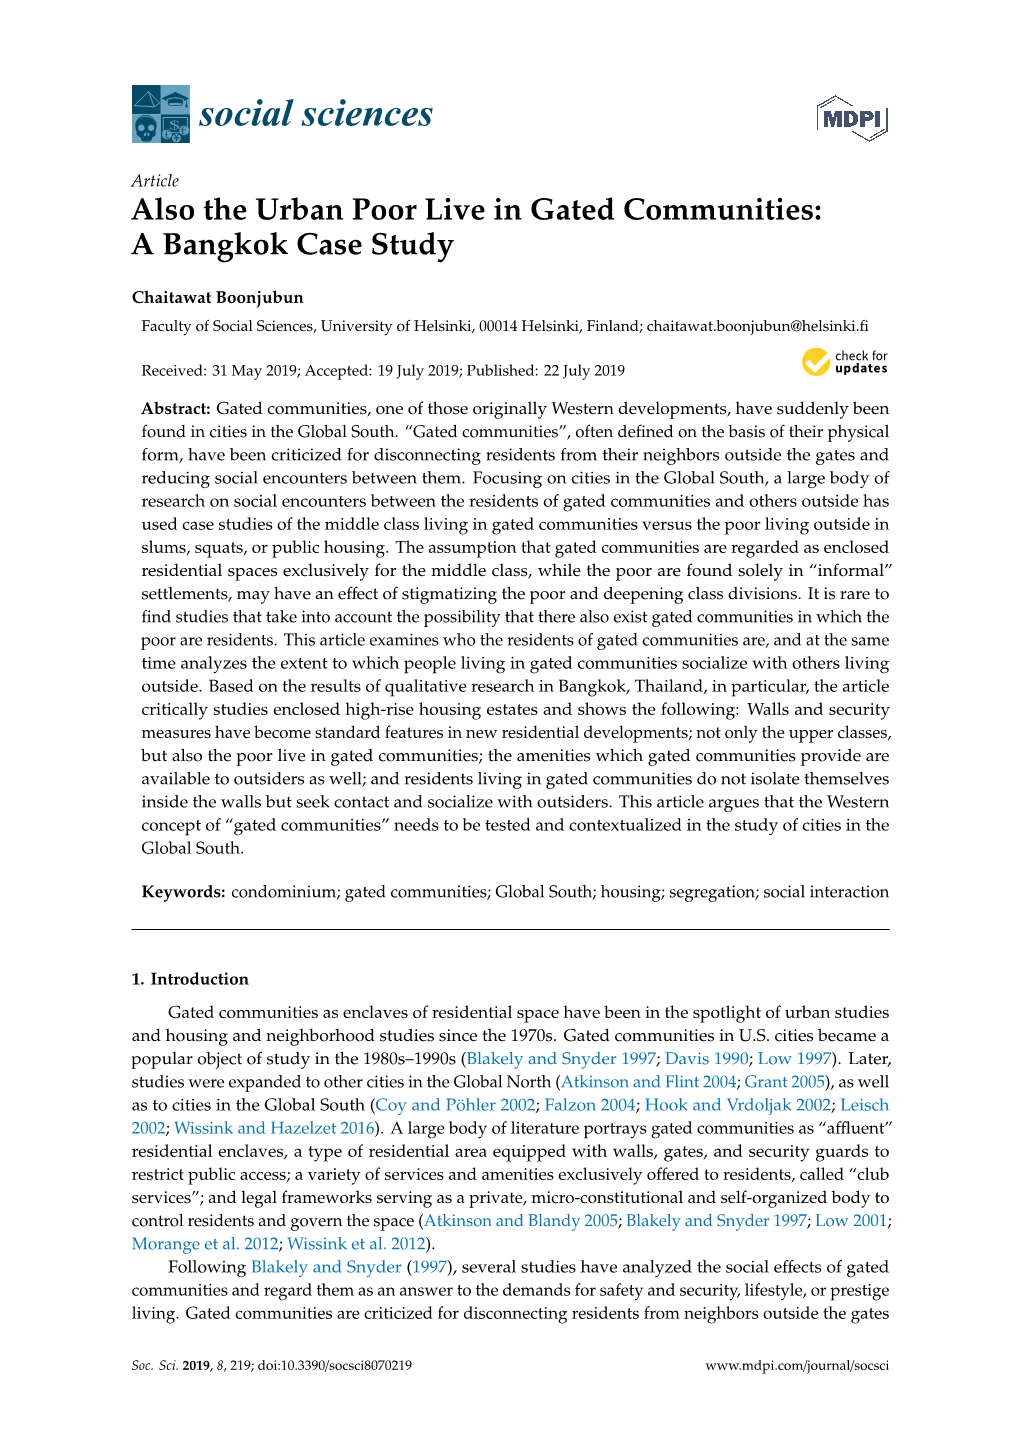 A Bangkok Case Study